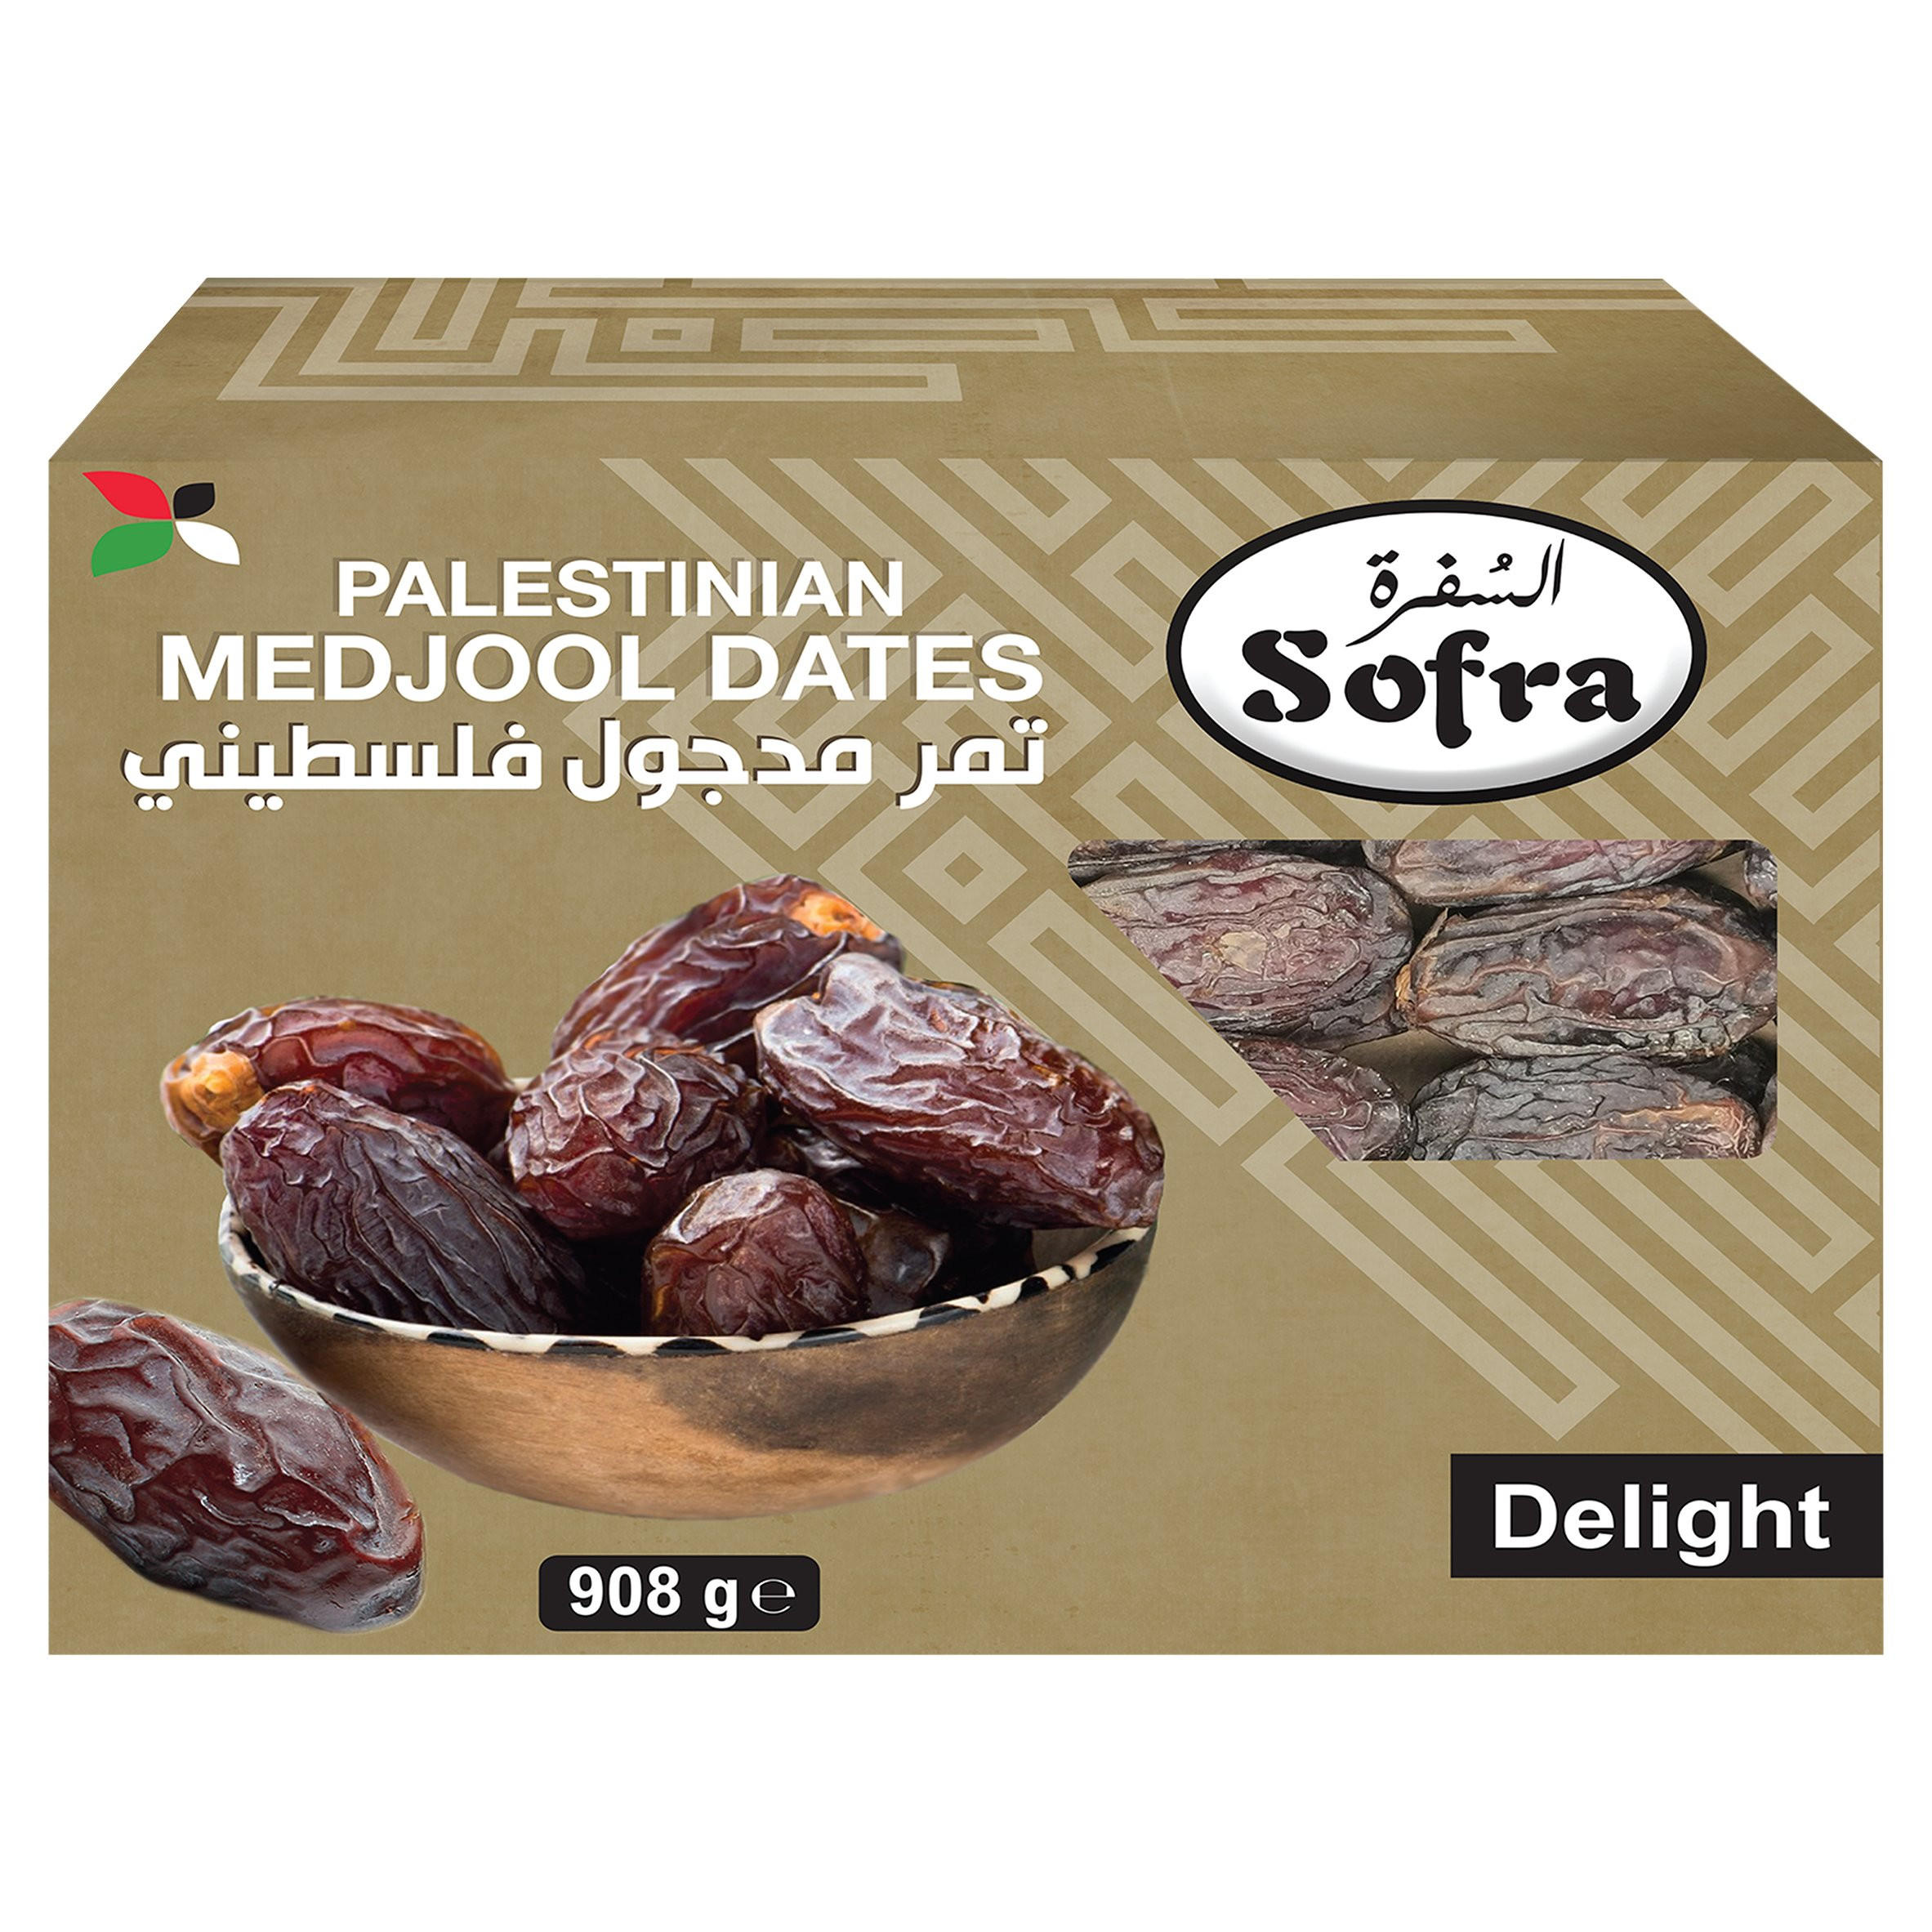 Sofra Palestinian Medjool Dates 908g, Dried Fruit